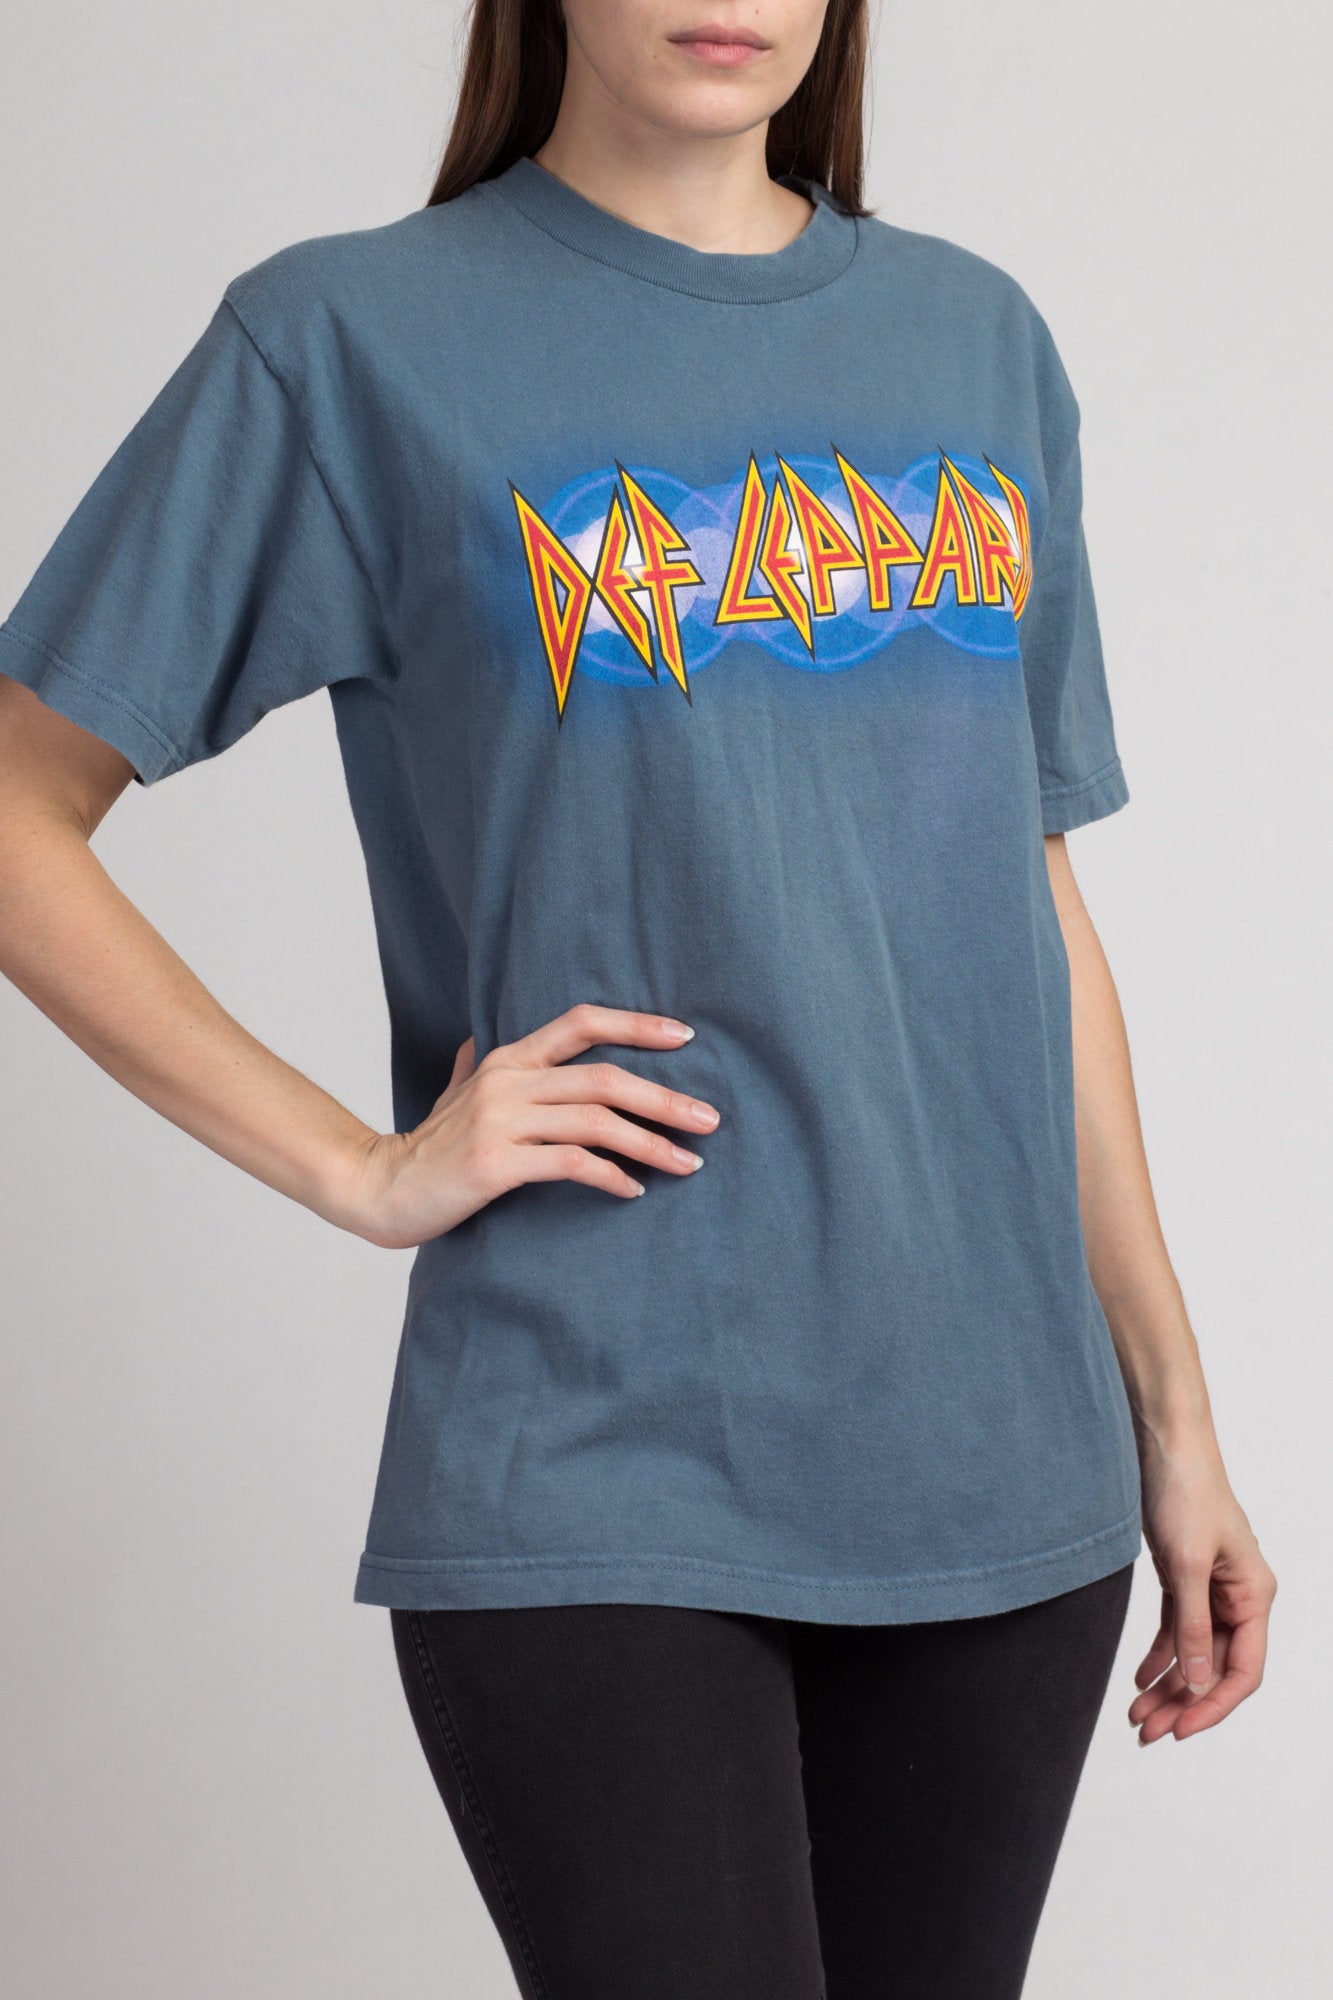 Vintage 90s Def Leppard Euphoria Tour T Shirt - Medium | 1999 Unisex Authentic Graphic Rock Band Tee